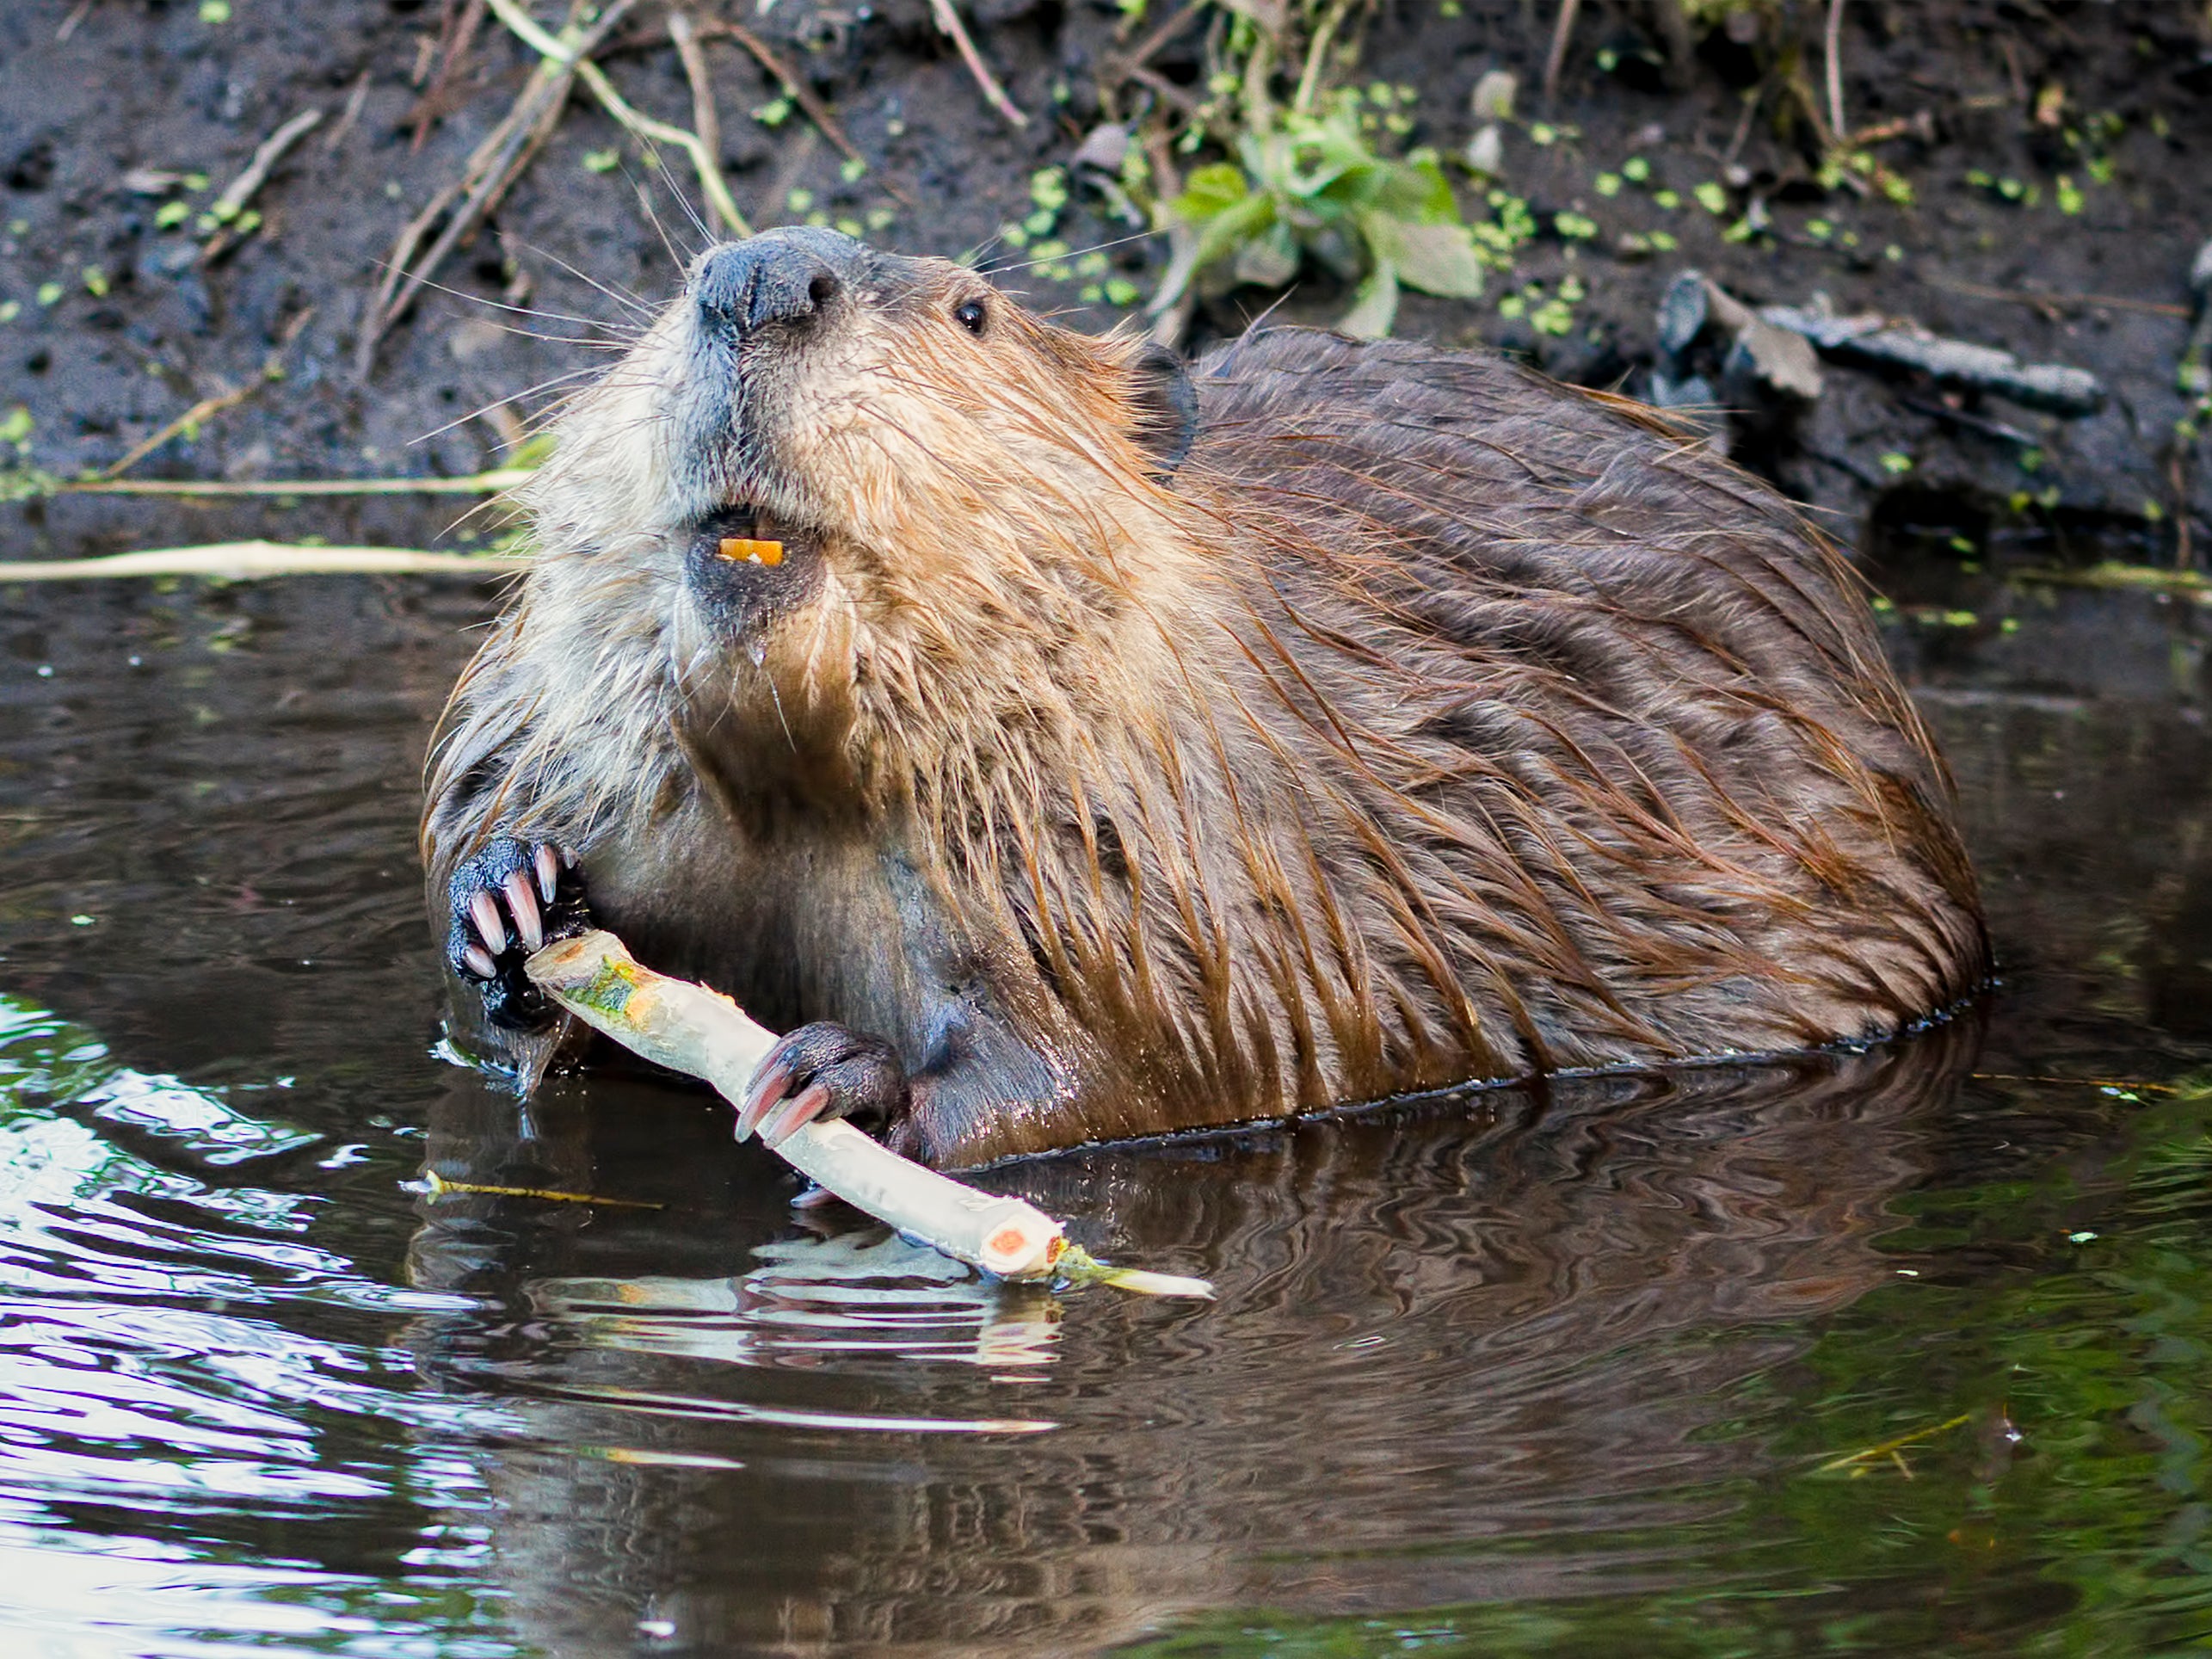 The semi-aquatic rodents’ dams benefit the environment